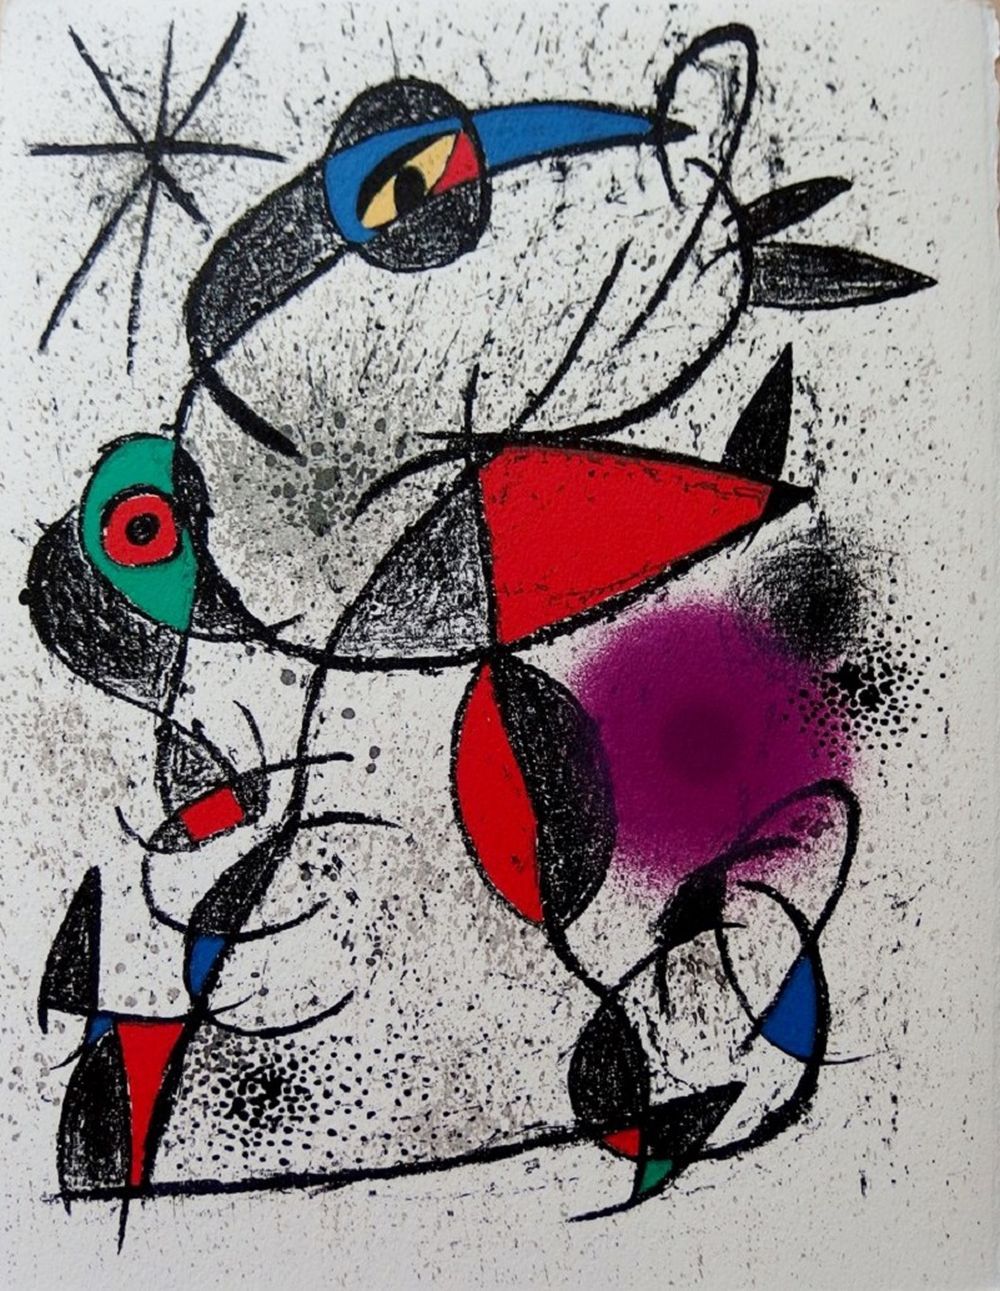 Joan Miró - Jaillie du calcaire, 1972 琼-米罗-从石灰石中出来，1972年

阿凯斯纸上的原始石版画
没有签名，没有编号
&hellip;